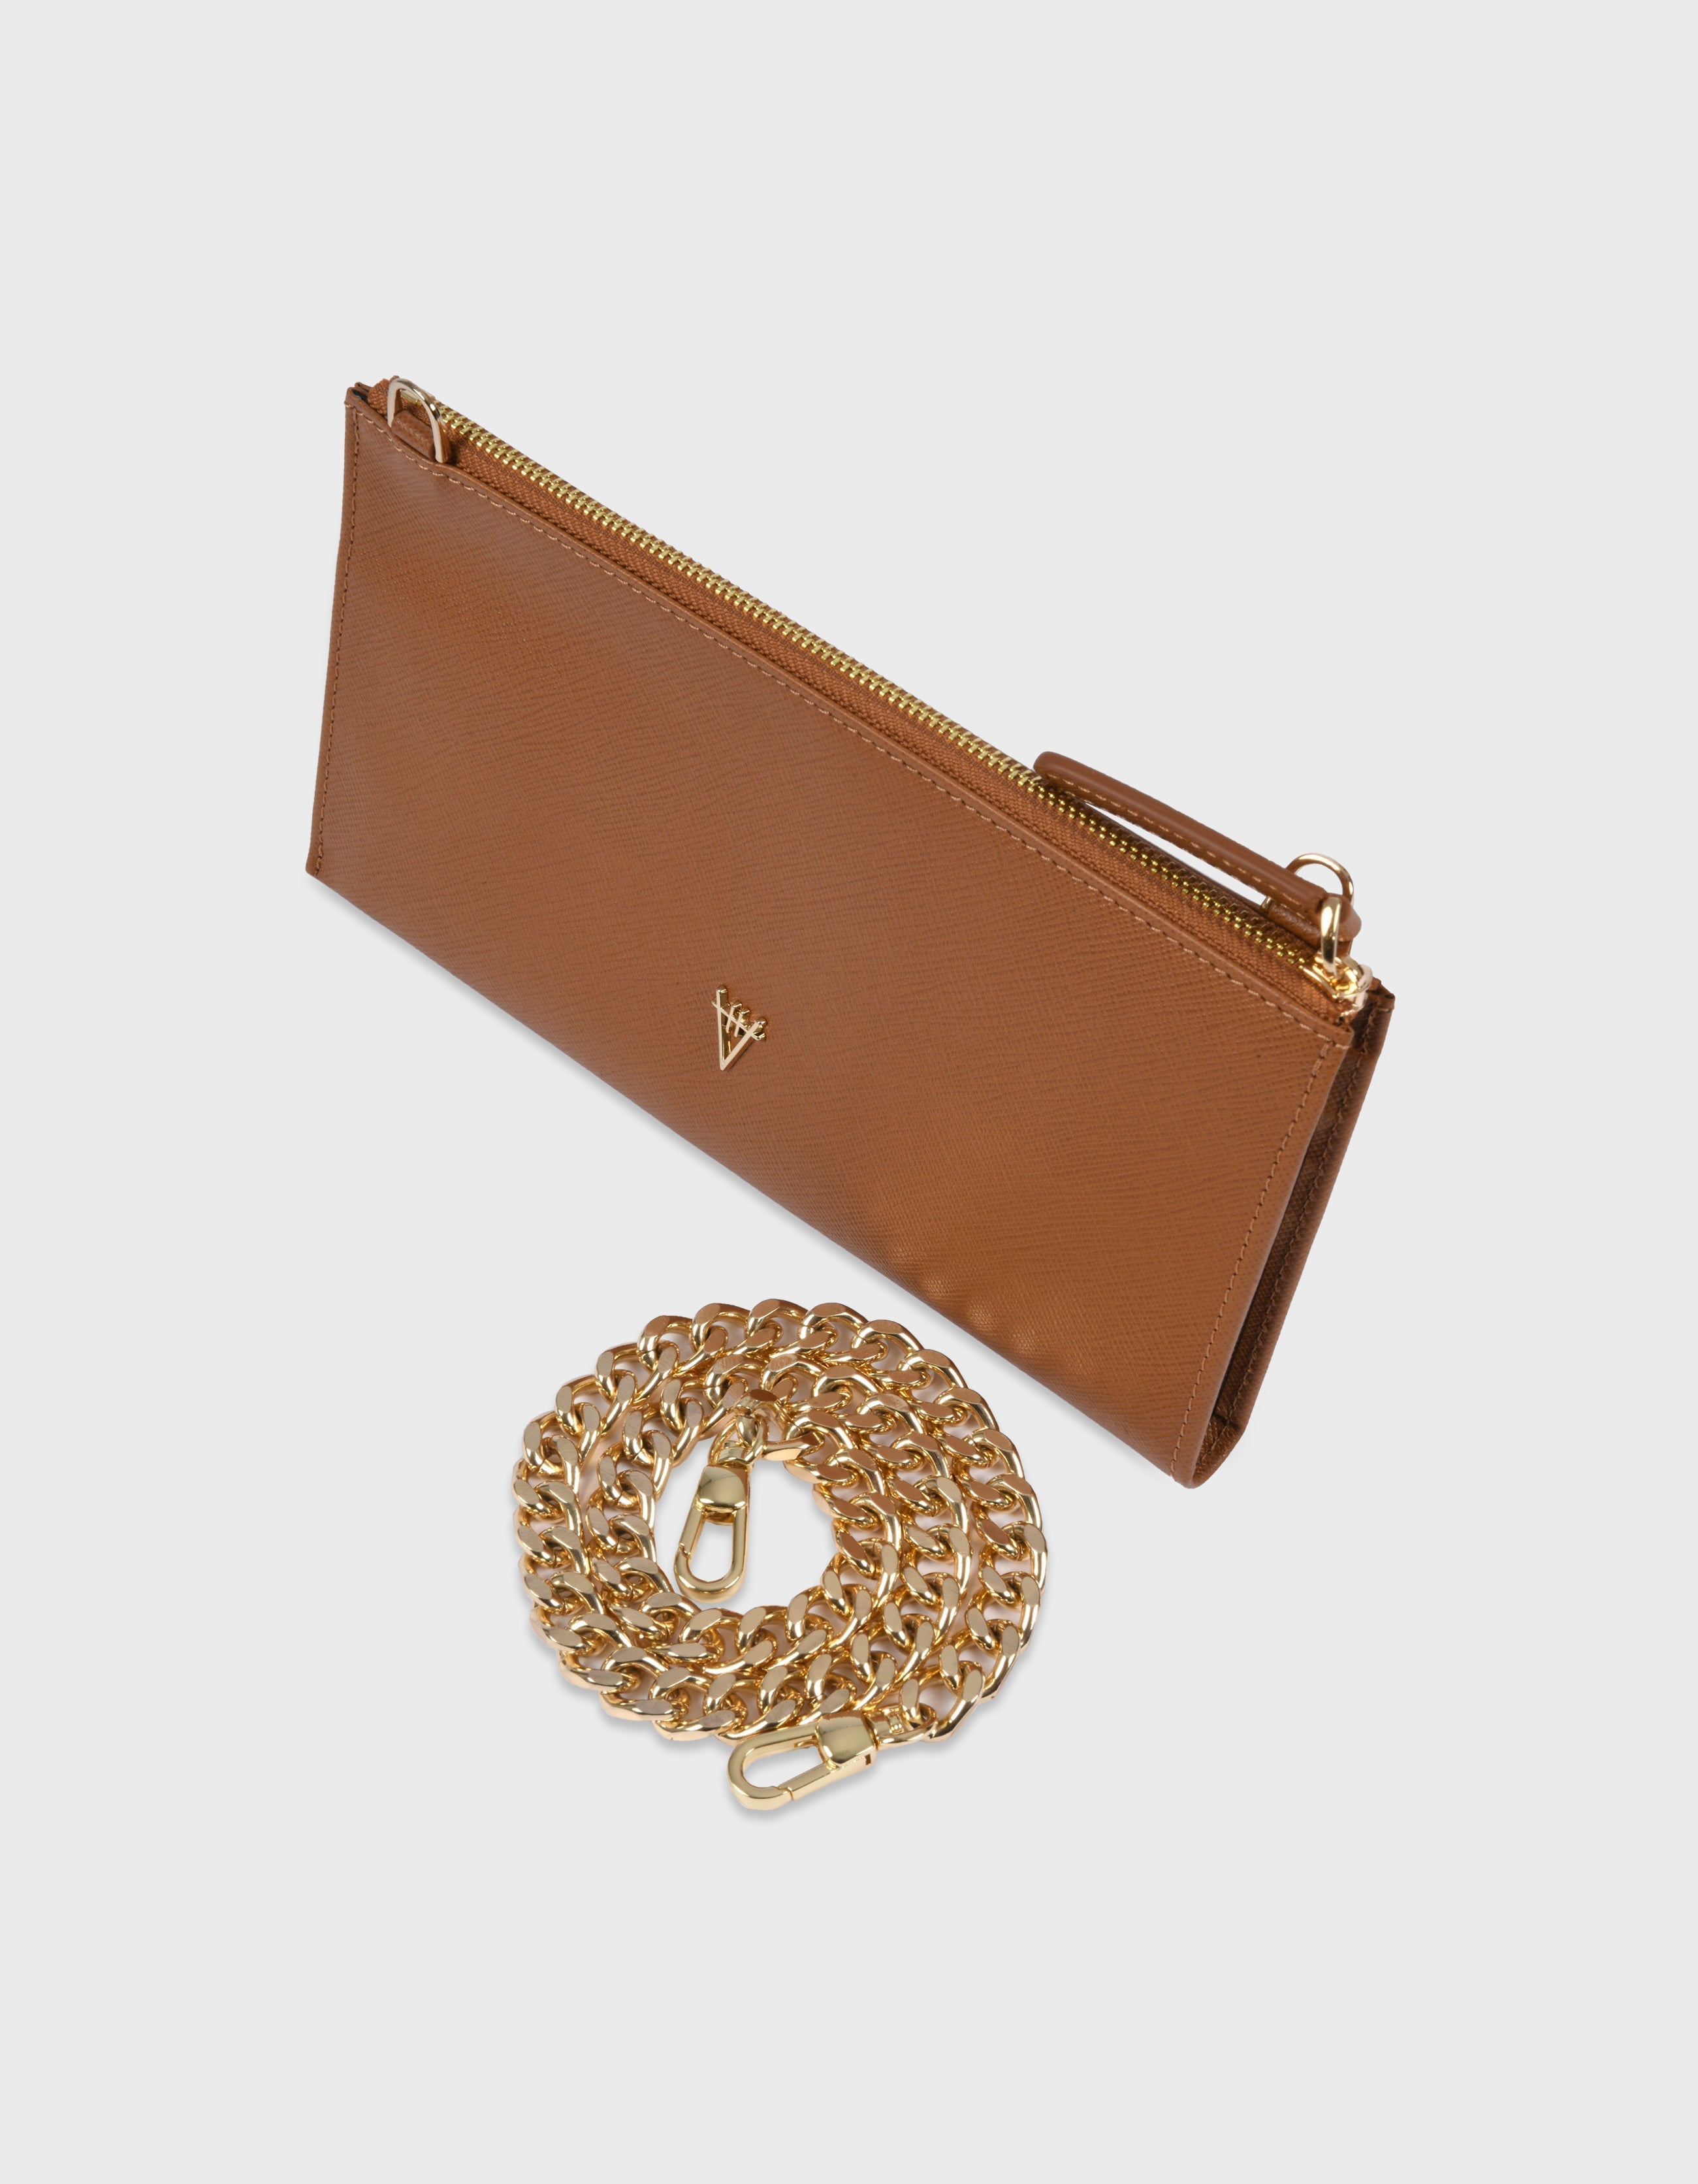 HiVa Atelier | Omnia Chain Bag & Clutch Wood | Beautiful and Versatile